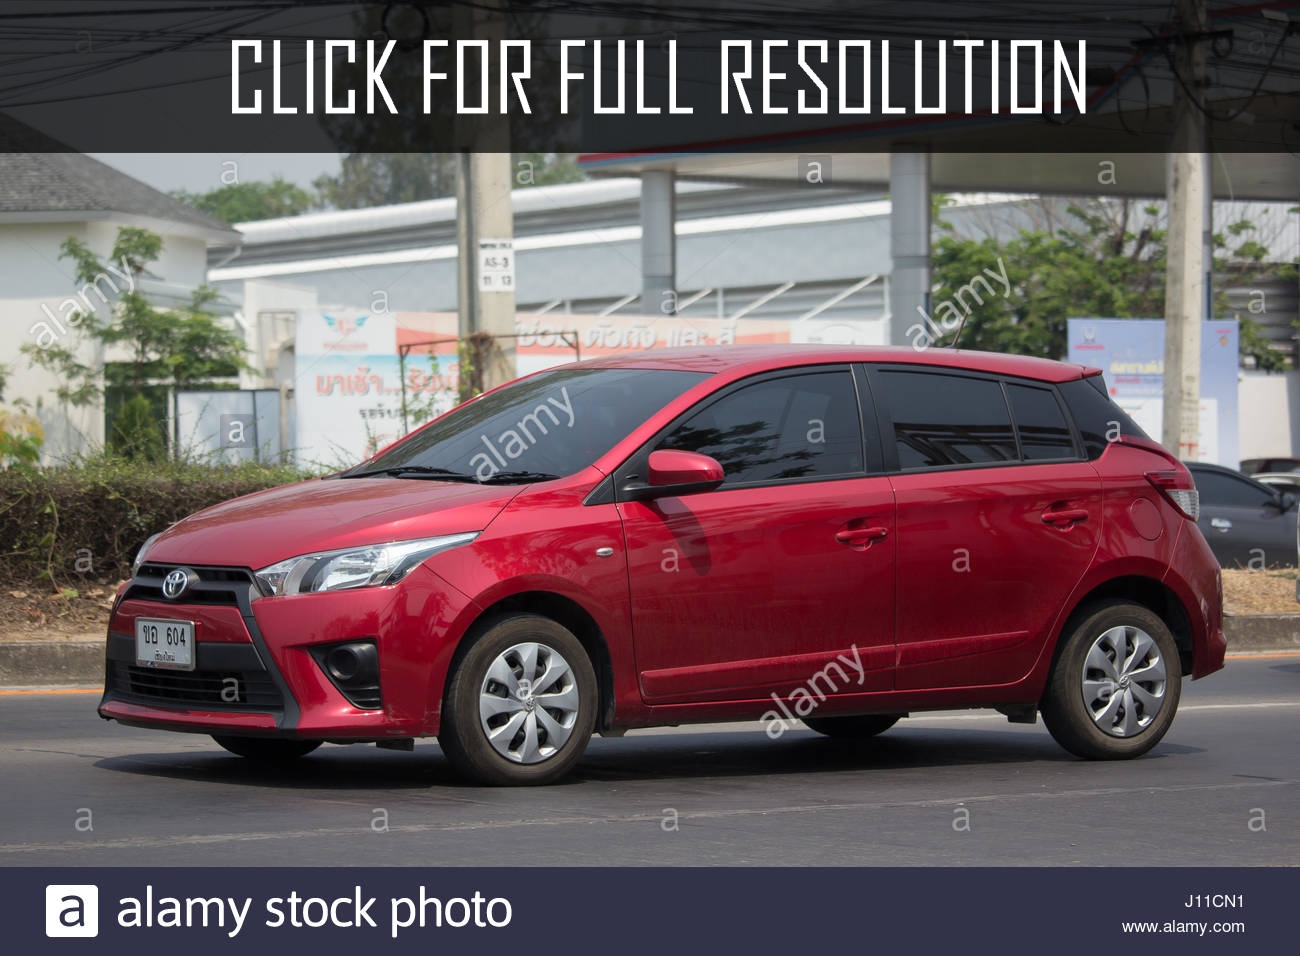 Toyota Yaris Eco